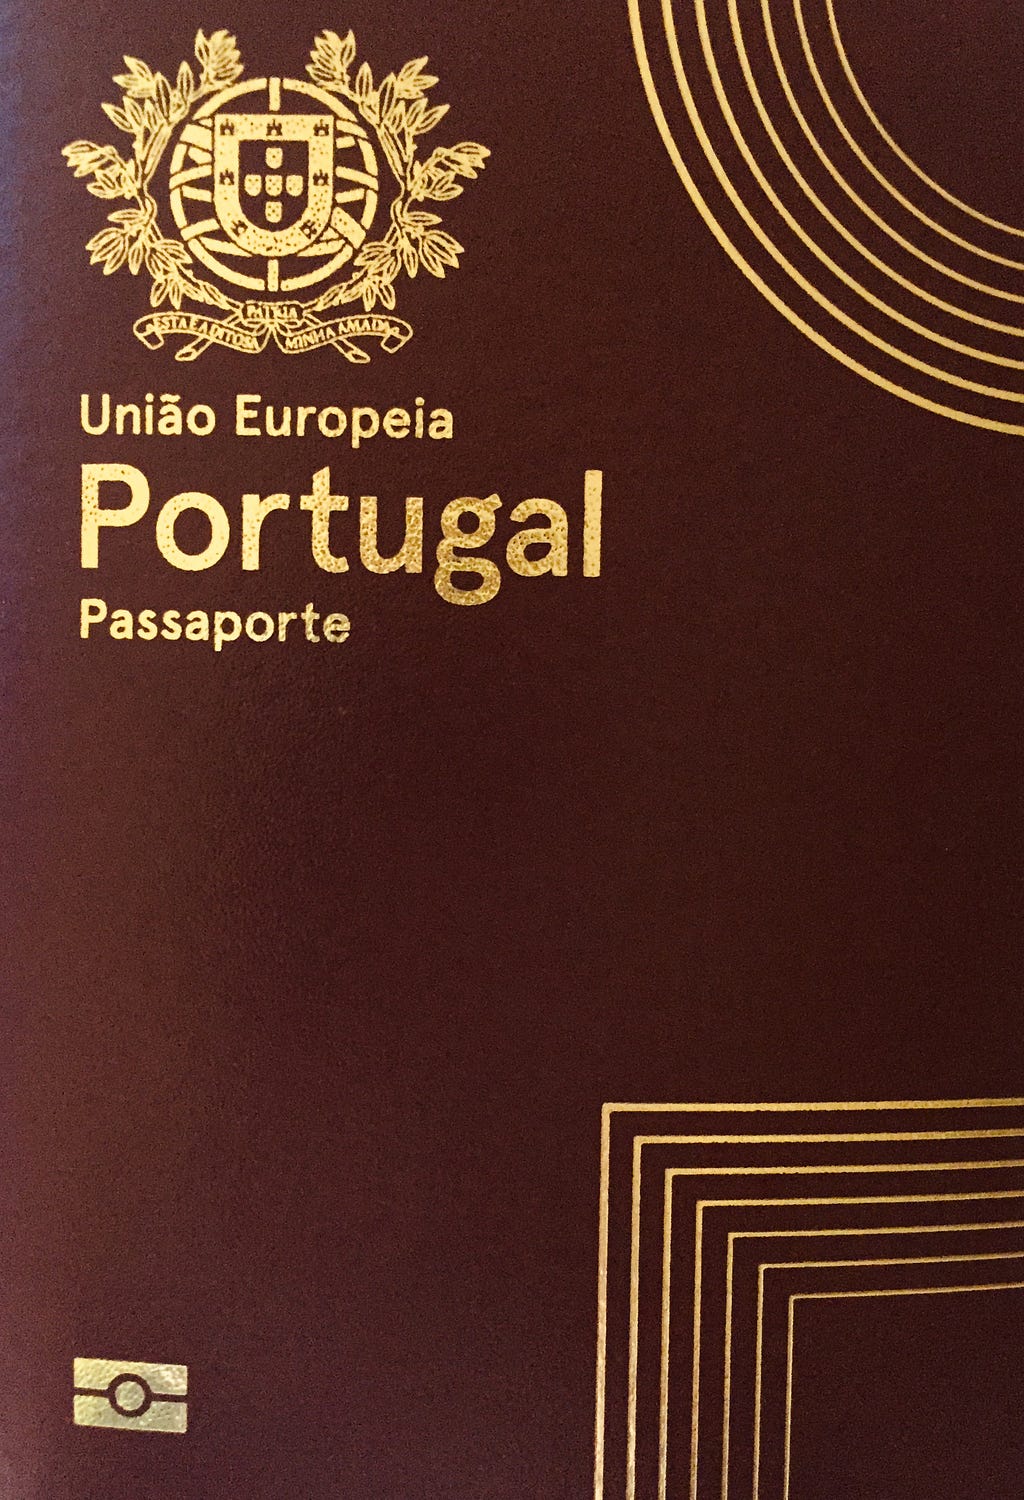 Golden Visa Portugal Passport